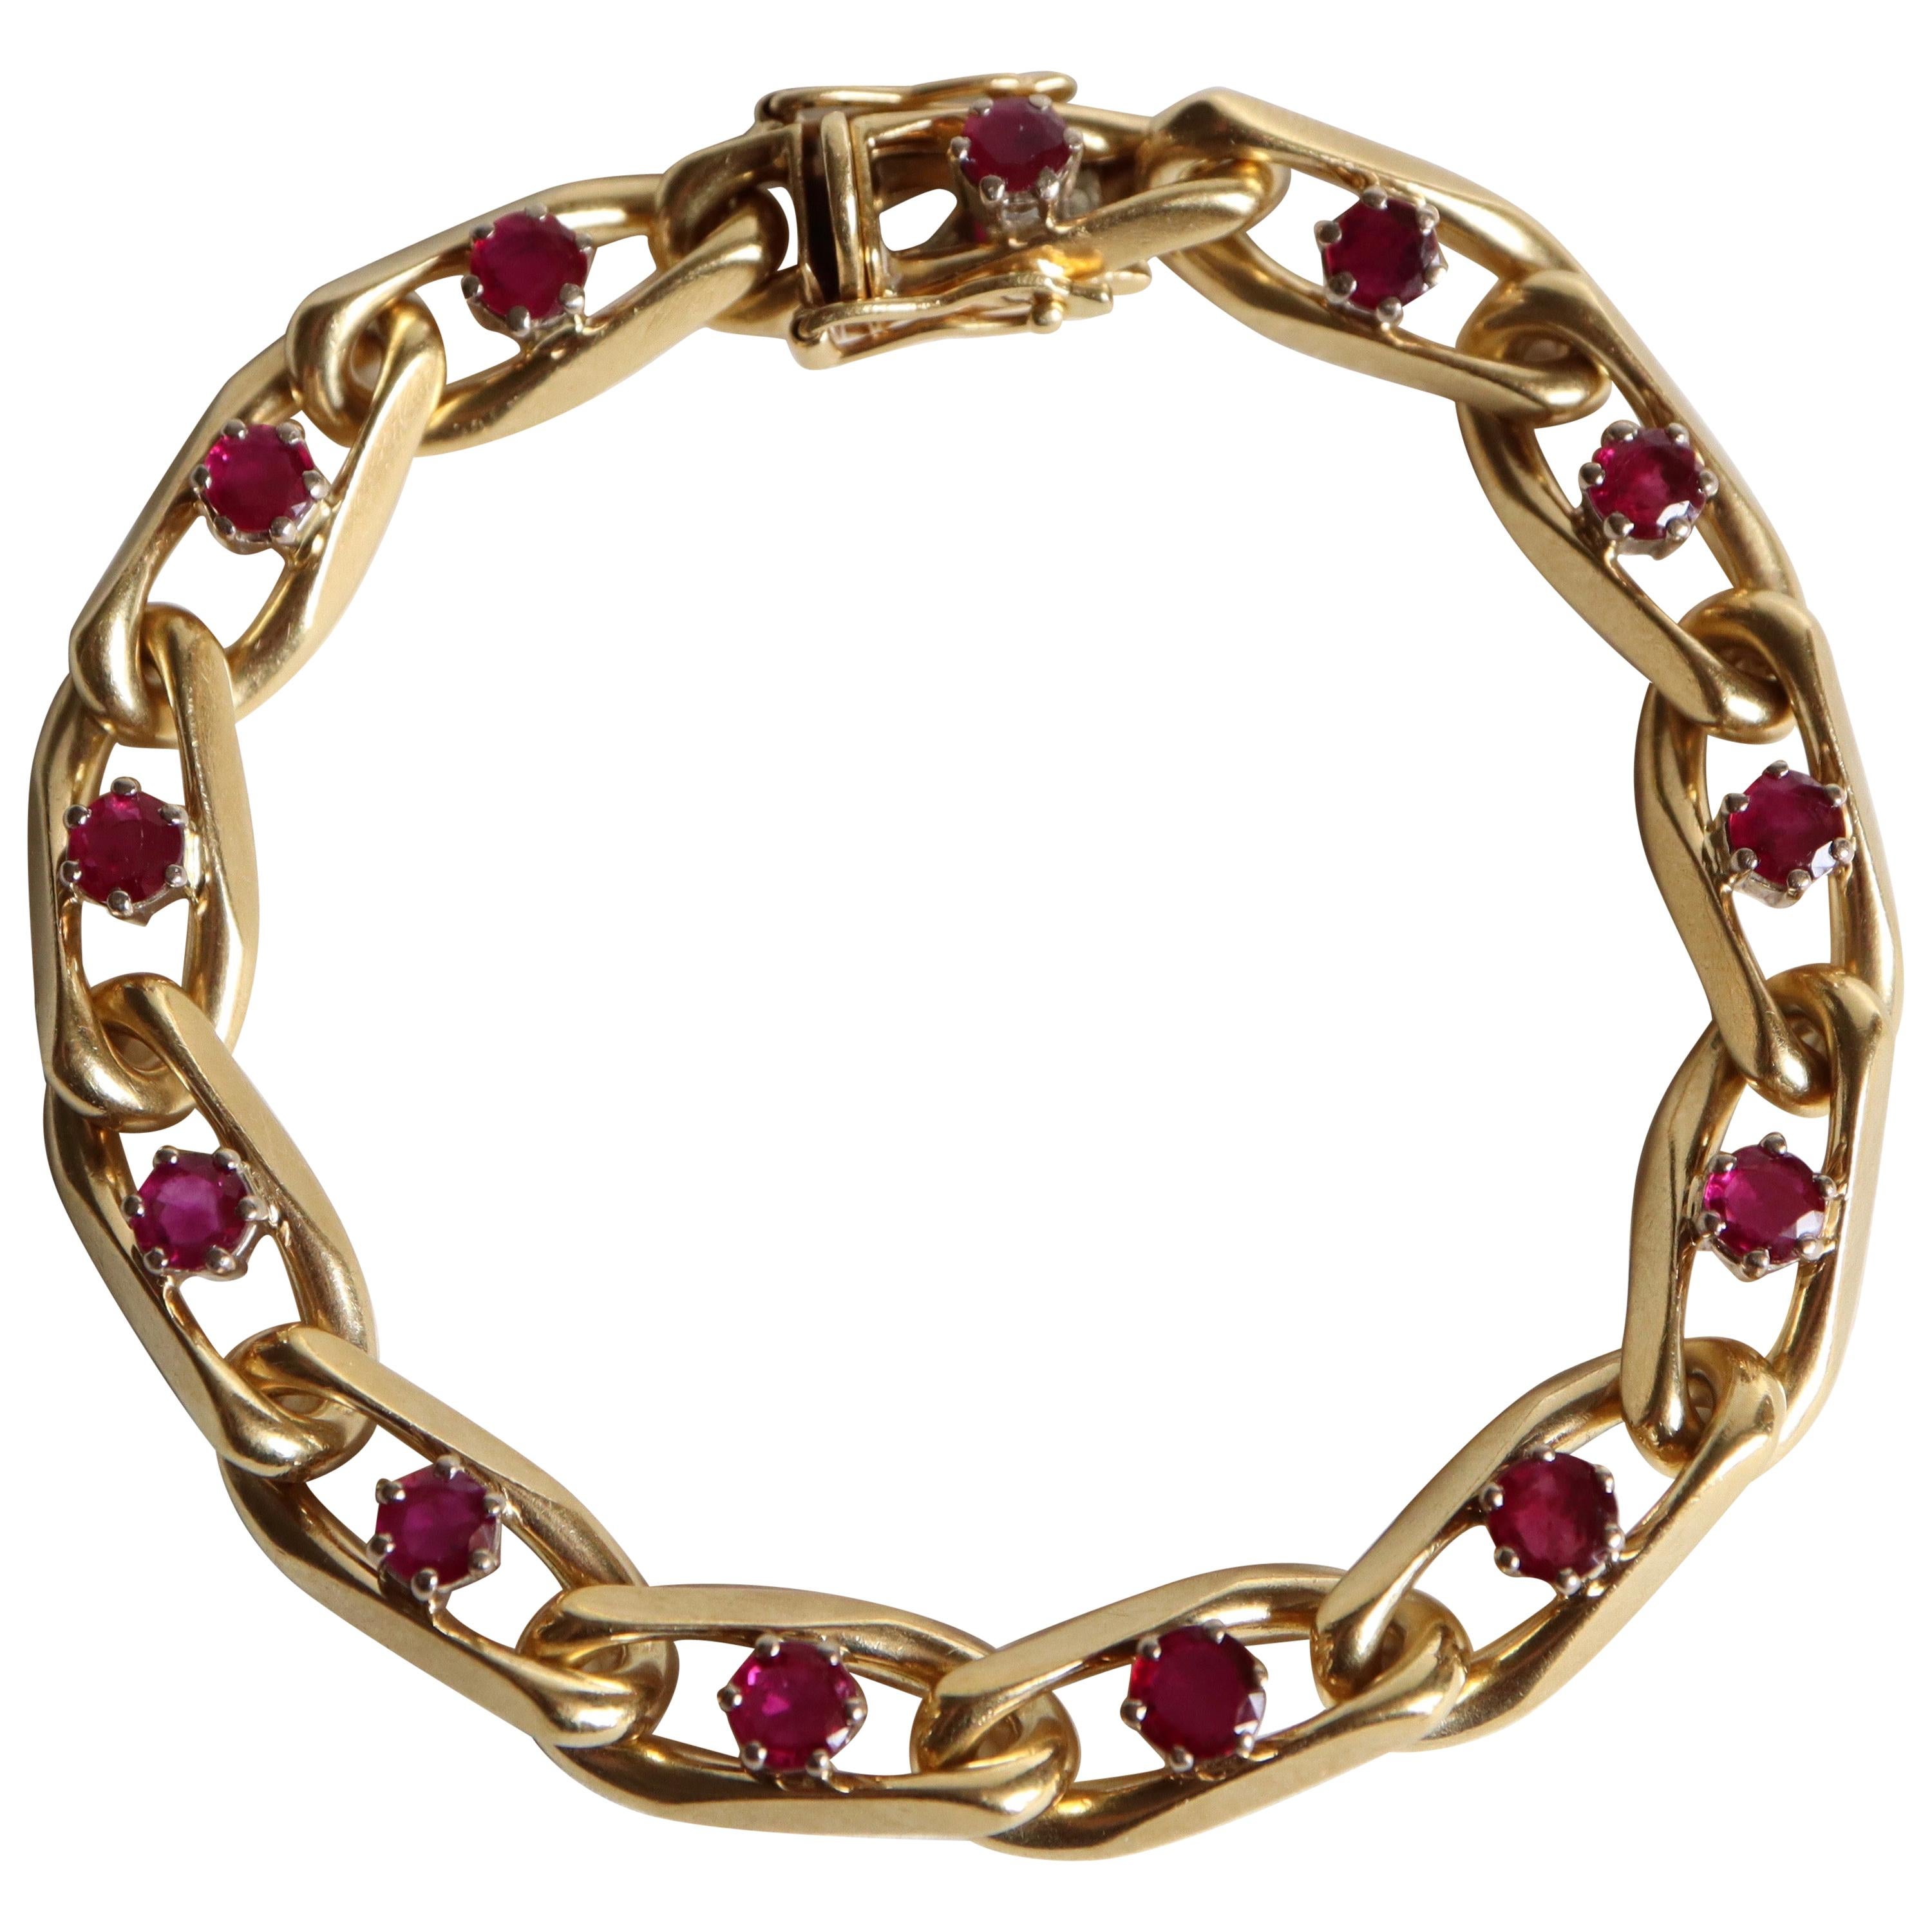 Chaumet 18 Karat Yellow Gold and Ruby Bracelet